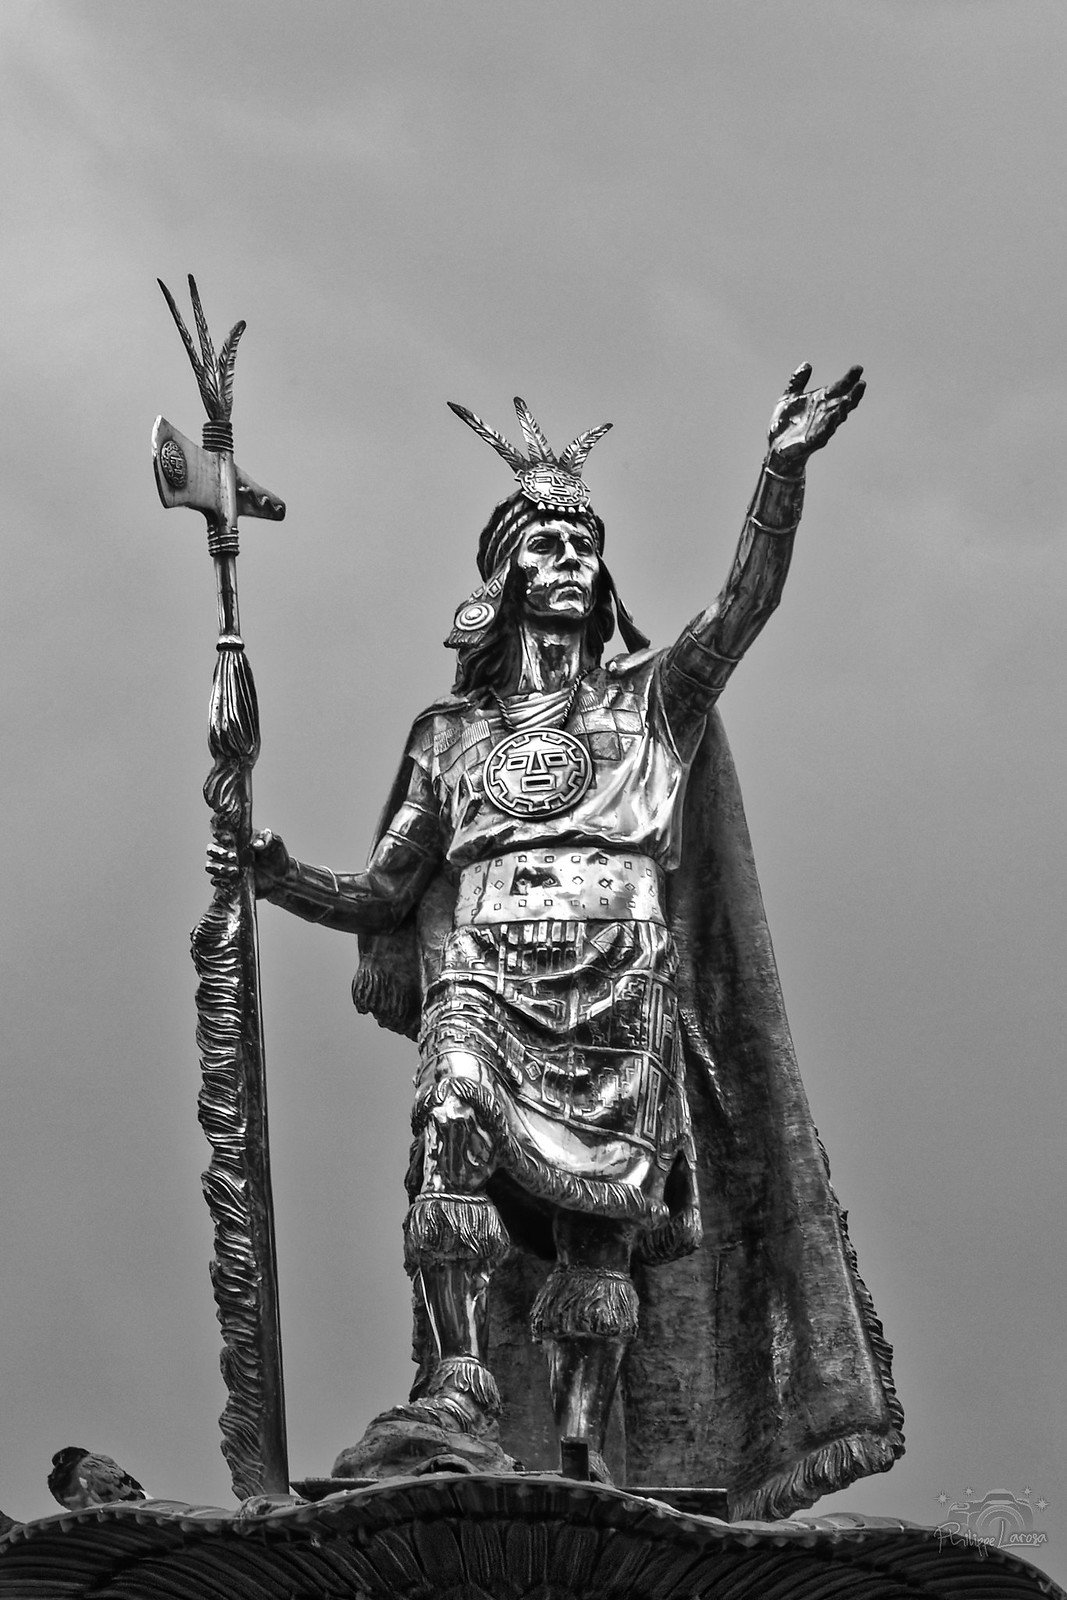 Statue Pachacuti Inca Yupanqui (Pachacútec), Plaza de Armas, Cuzco, Peru.